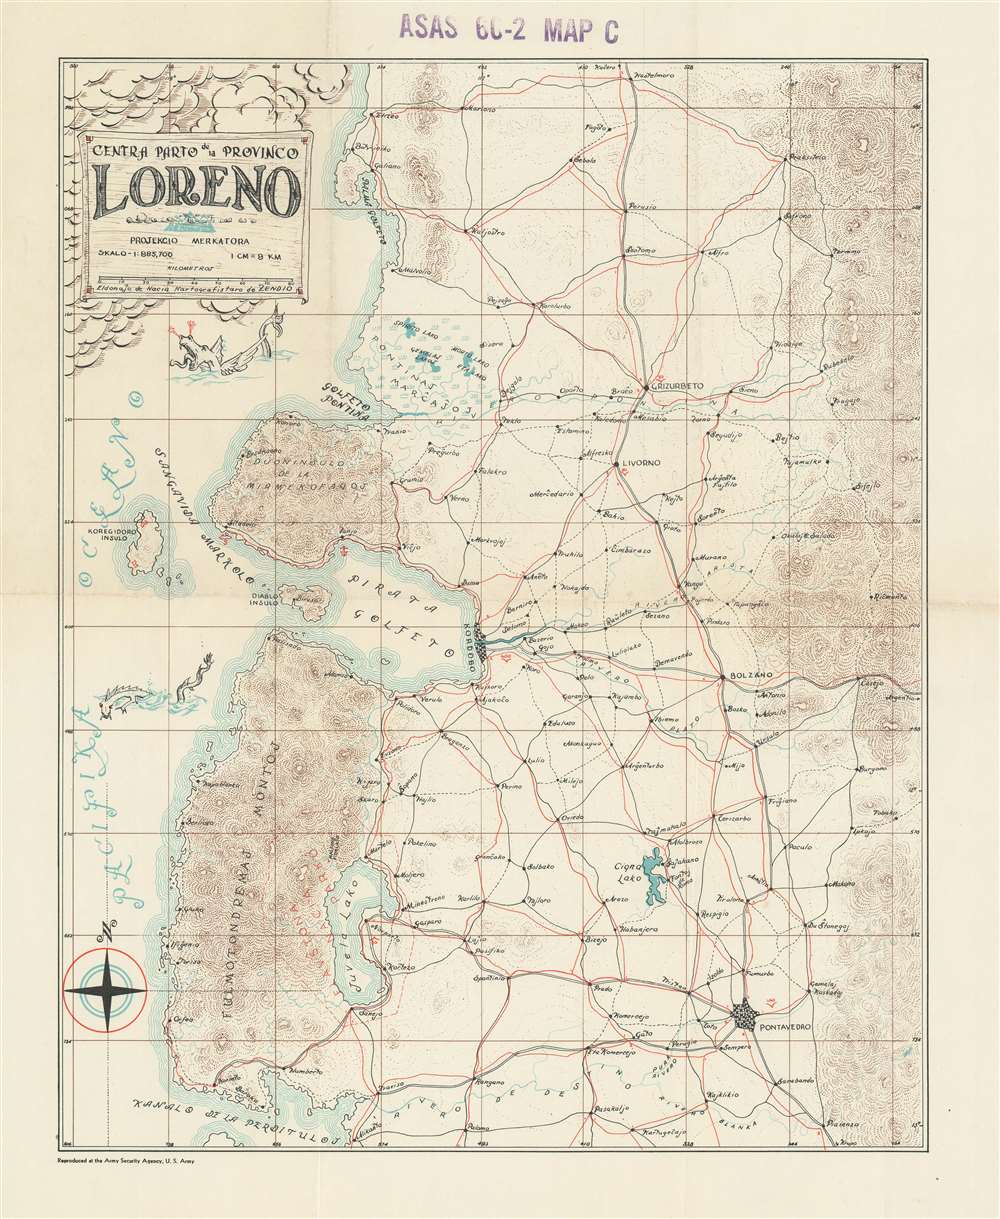 Zendia Respubliko (ASAS 60-2 MAP A)/ Norda Parto de la Provinco Loreno (ASAS 60-2 MAP B)/ Centra Parto de la Provinco Loreno (ASAS 60-2 MAP C). - Alternate View 3